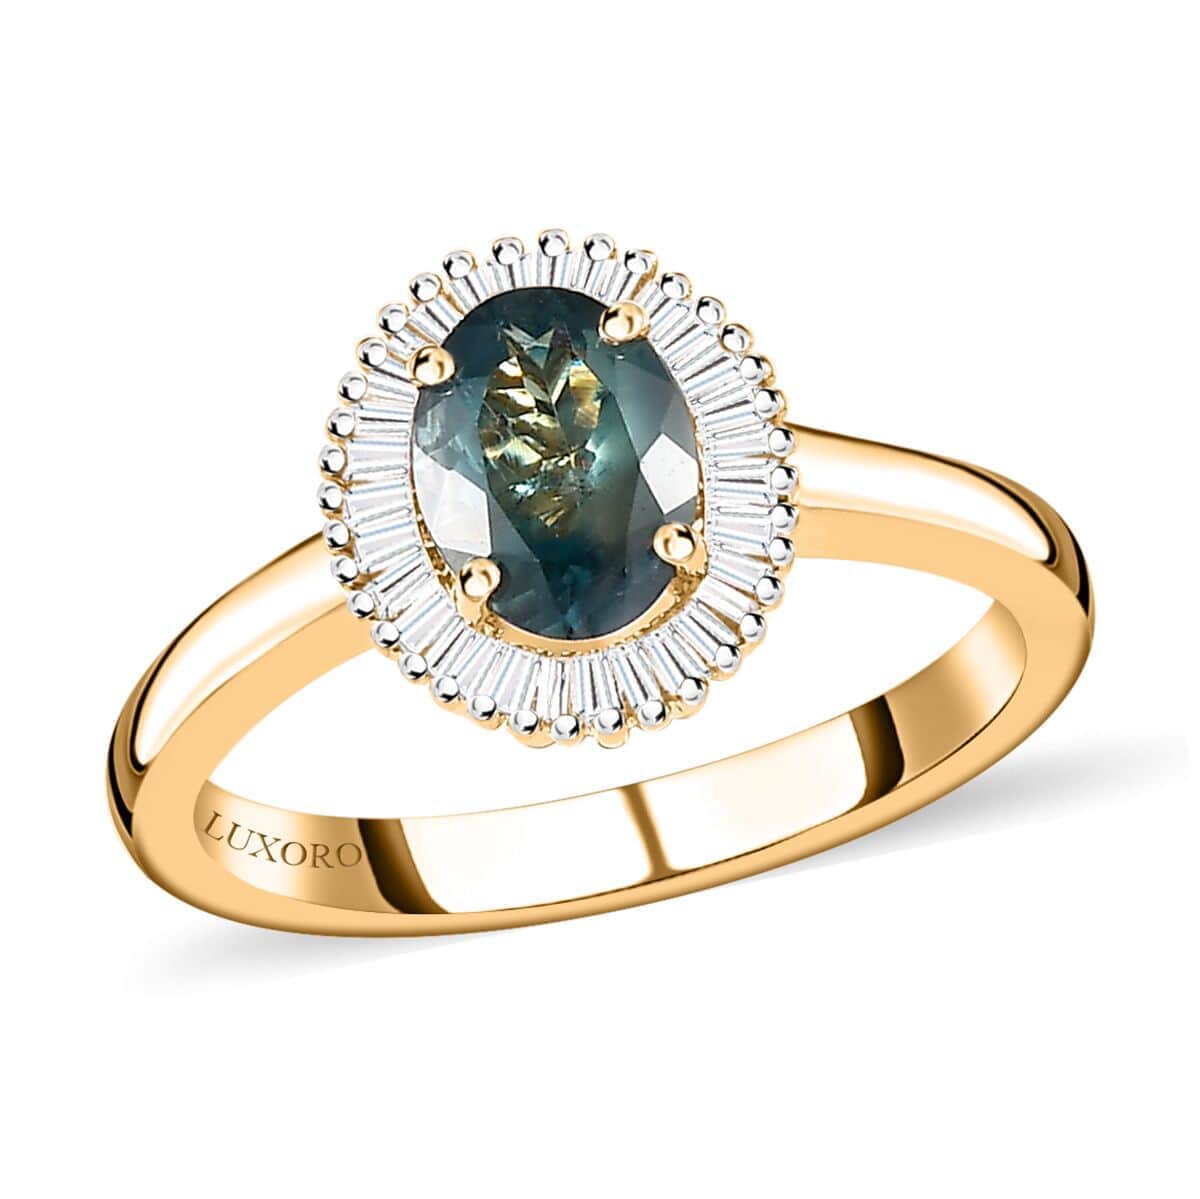 Luxoro 14K Yellow Gold AAA Narsipatnam Alexandrite and G-H I2 Diamond Halo Ring (Size 8.0) 4 Grams 1.50 ctw image number 0